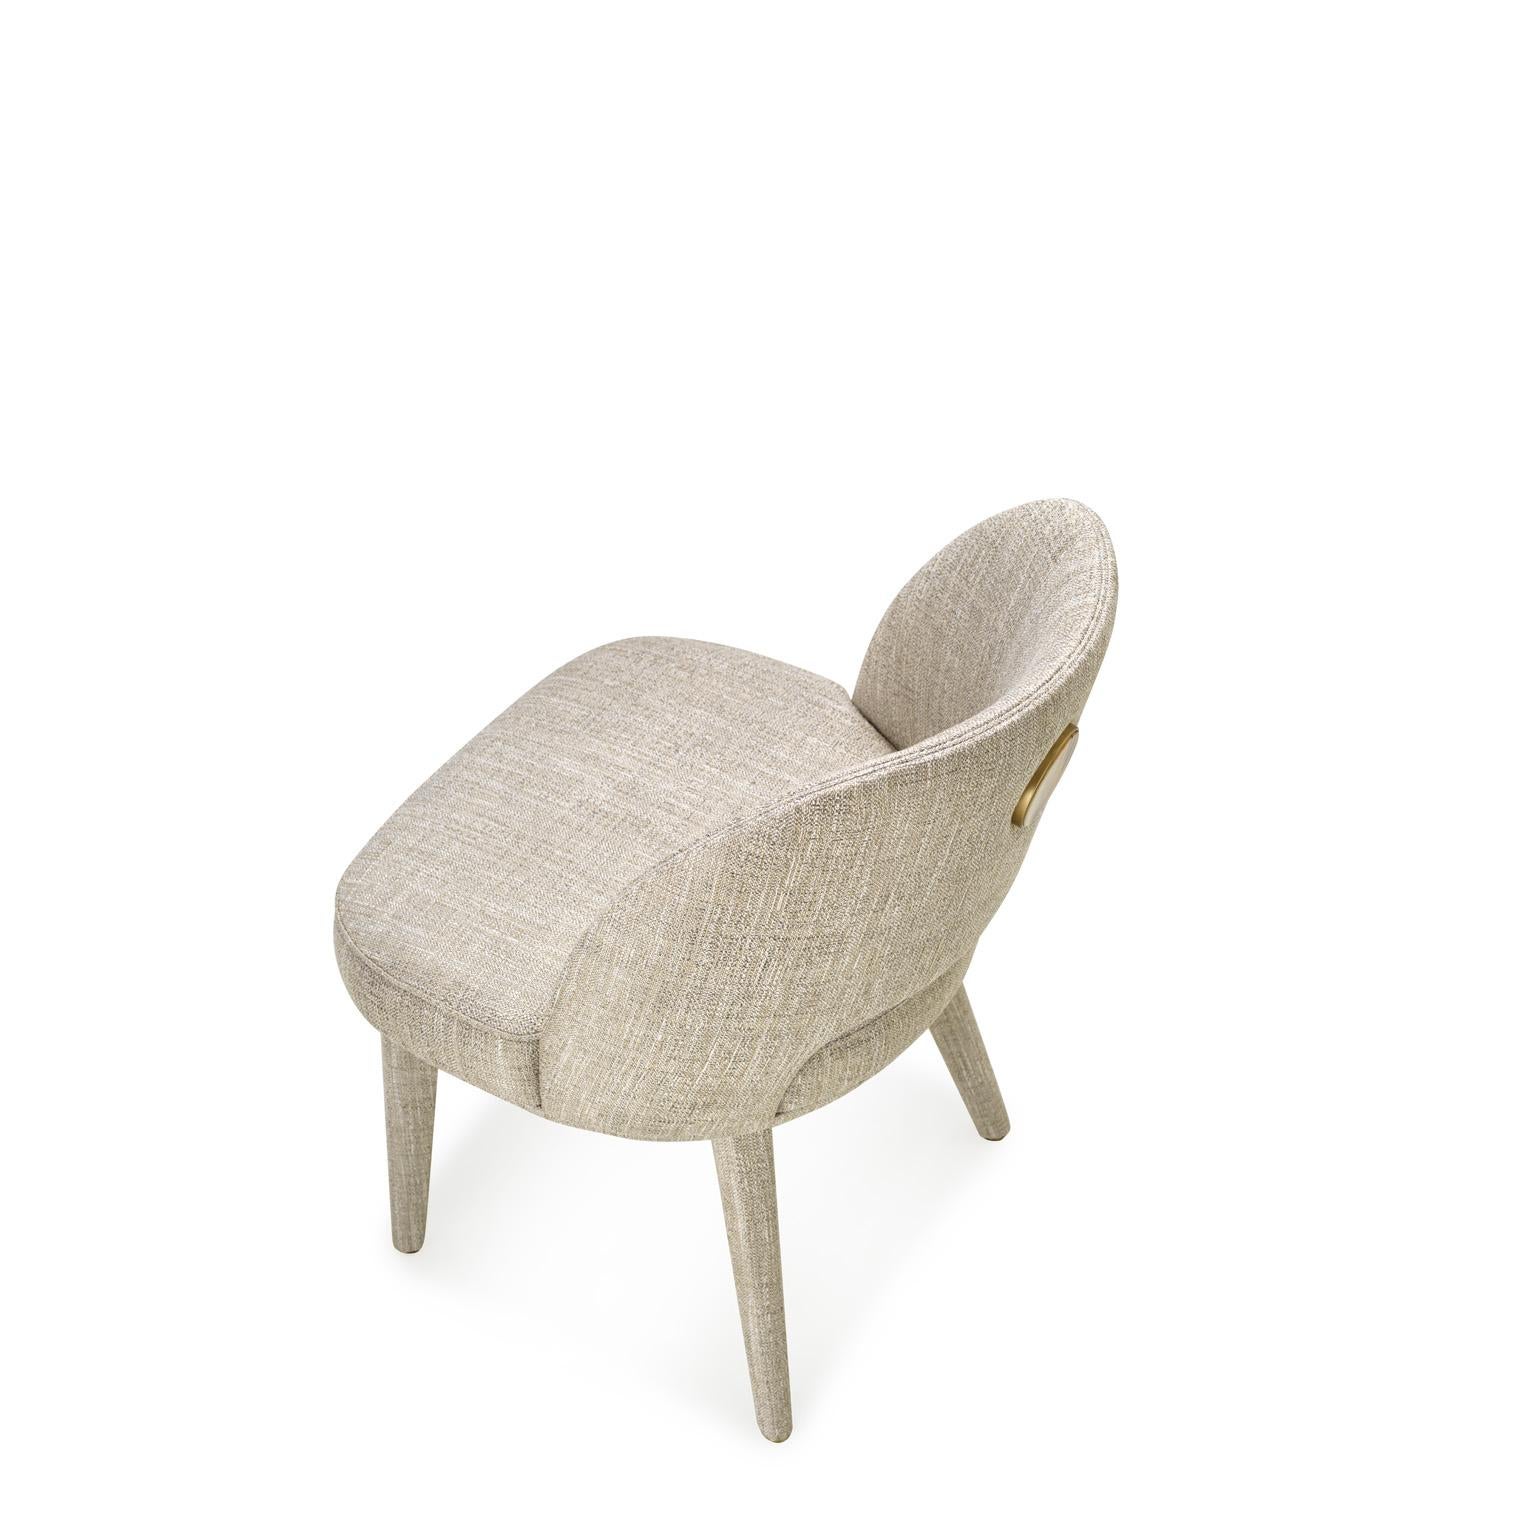 Penelope Chair in Sparks Fabric with Detail in Corno Italiano, Mod. 4430BG In New Condition For Sale In Recanati, Macerata